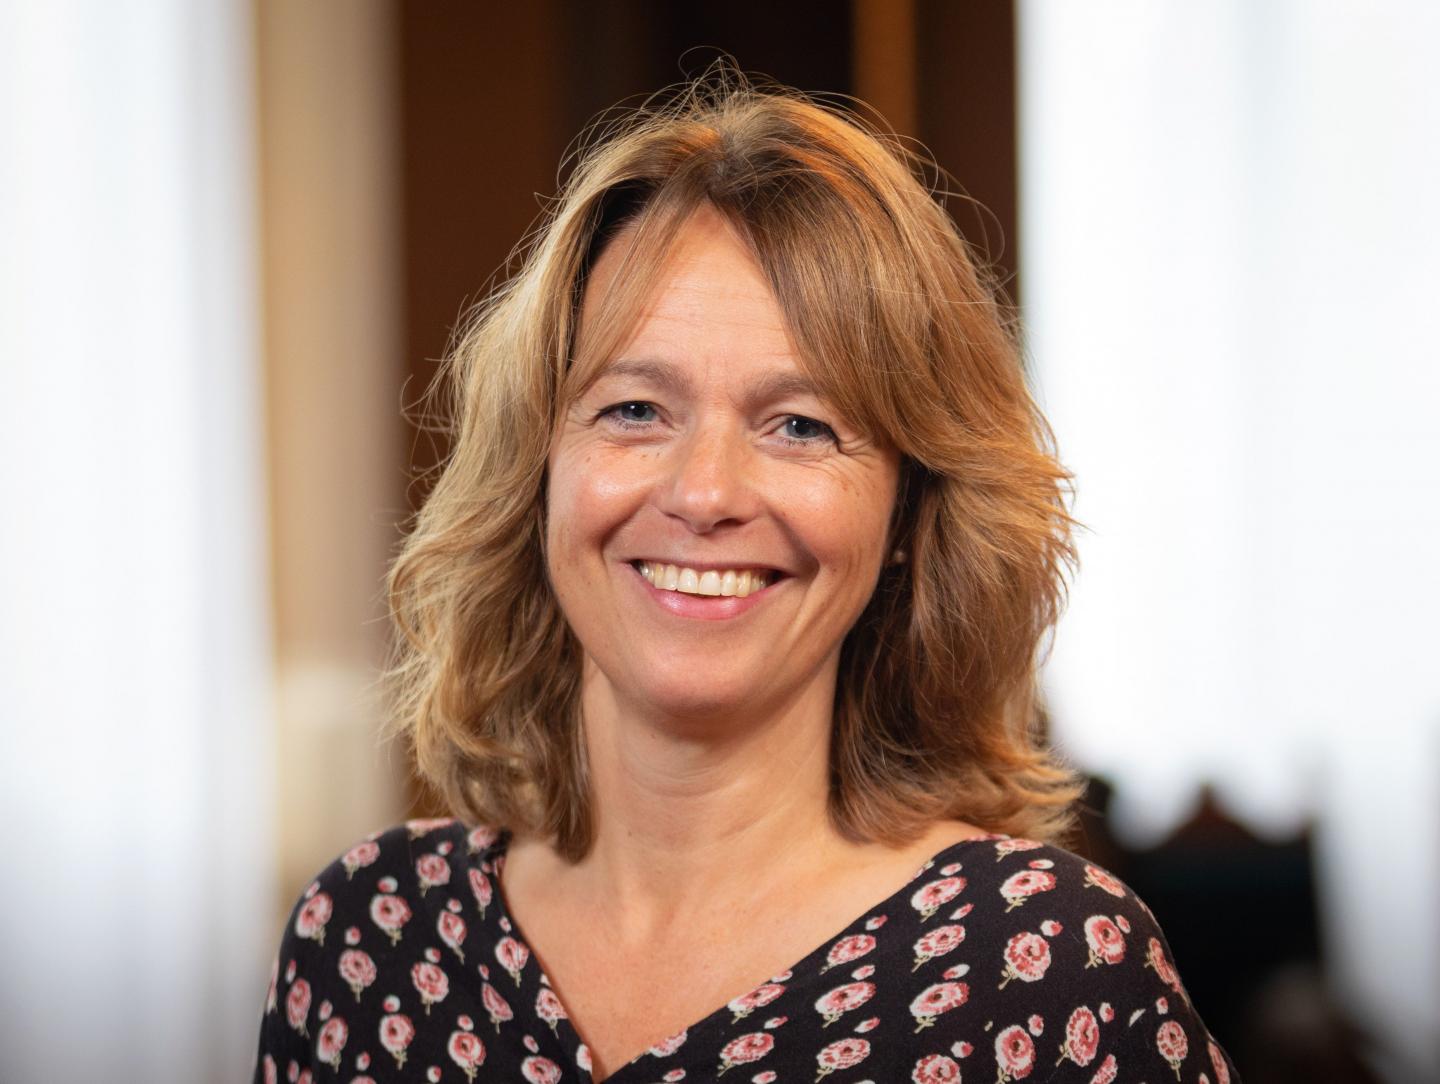 Helena Svaleryd, Professor at Department of Economics, Uppsala University